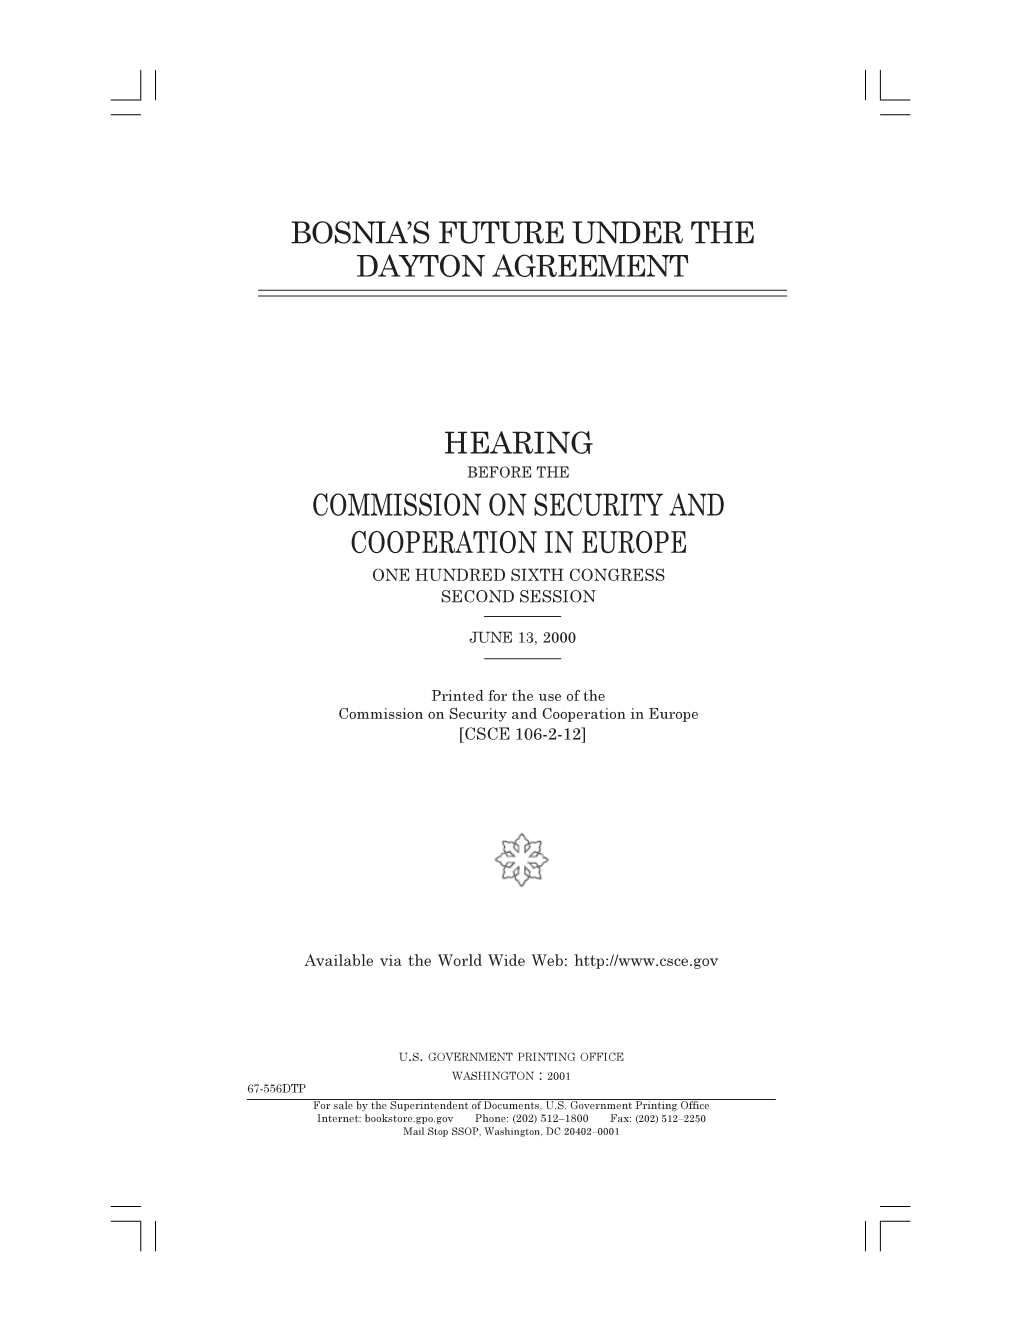 Bosnia's Future Under the Dayton Agreement Hearing